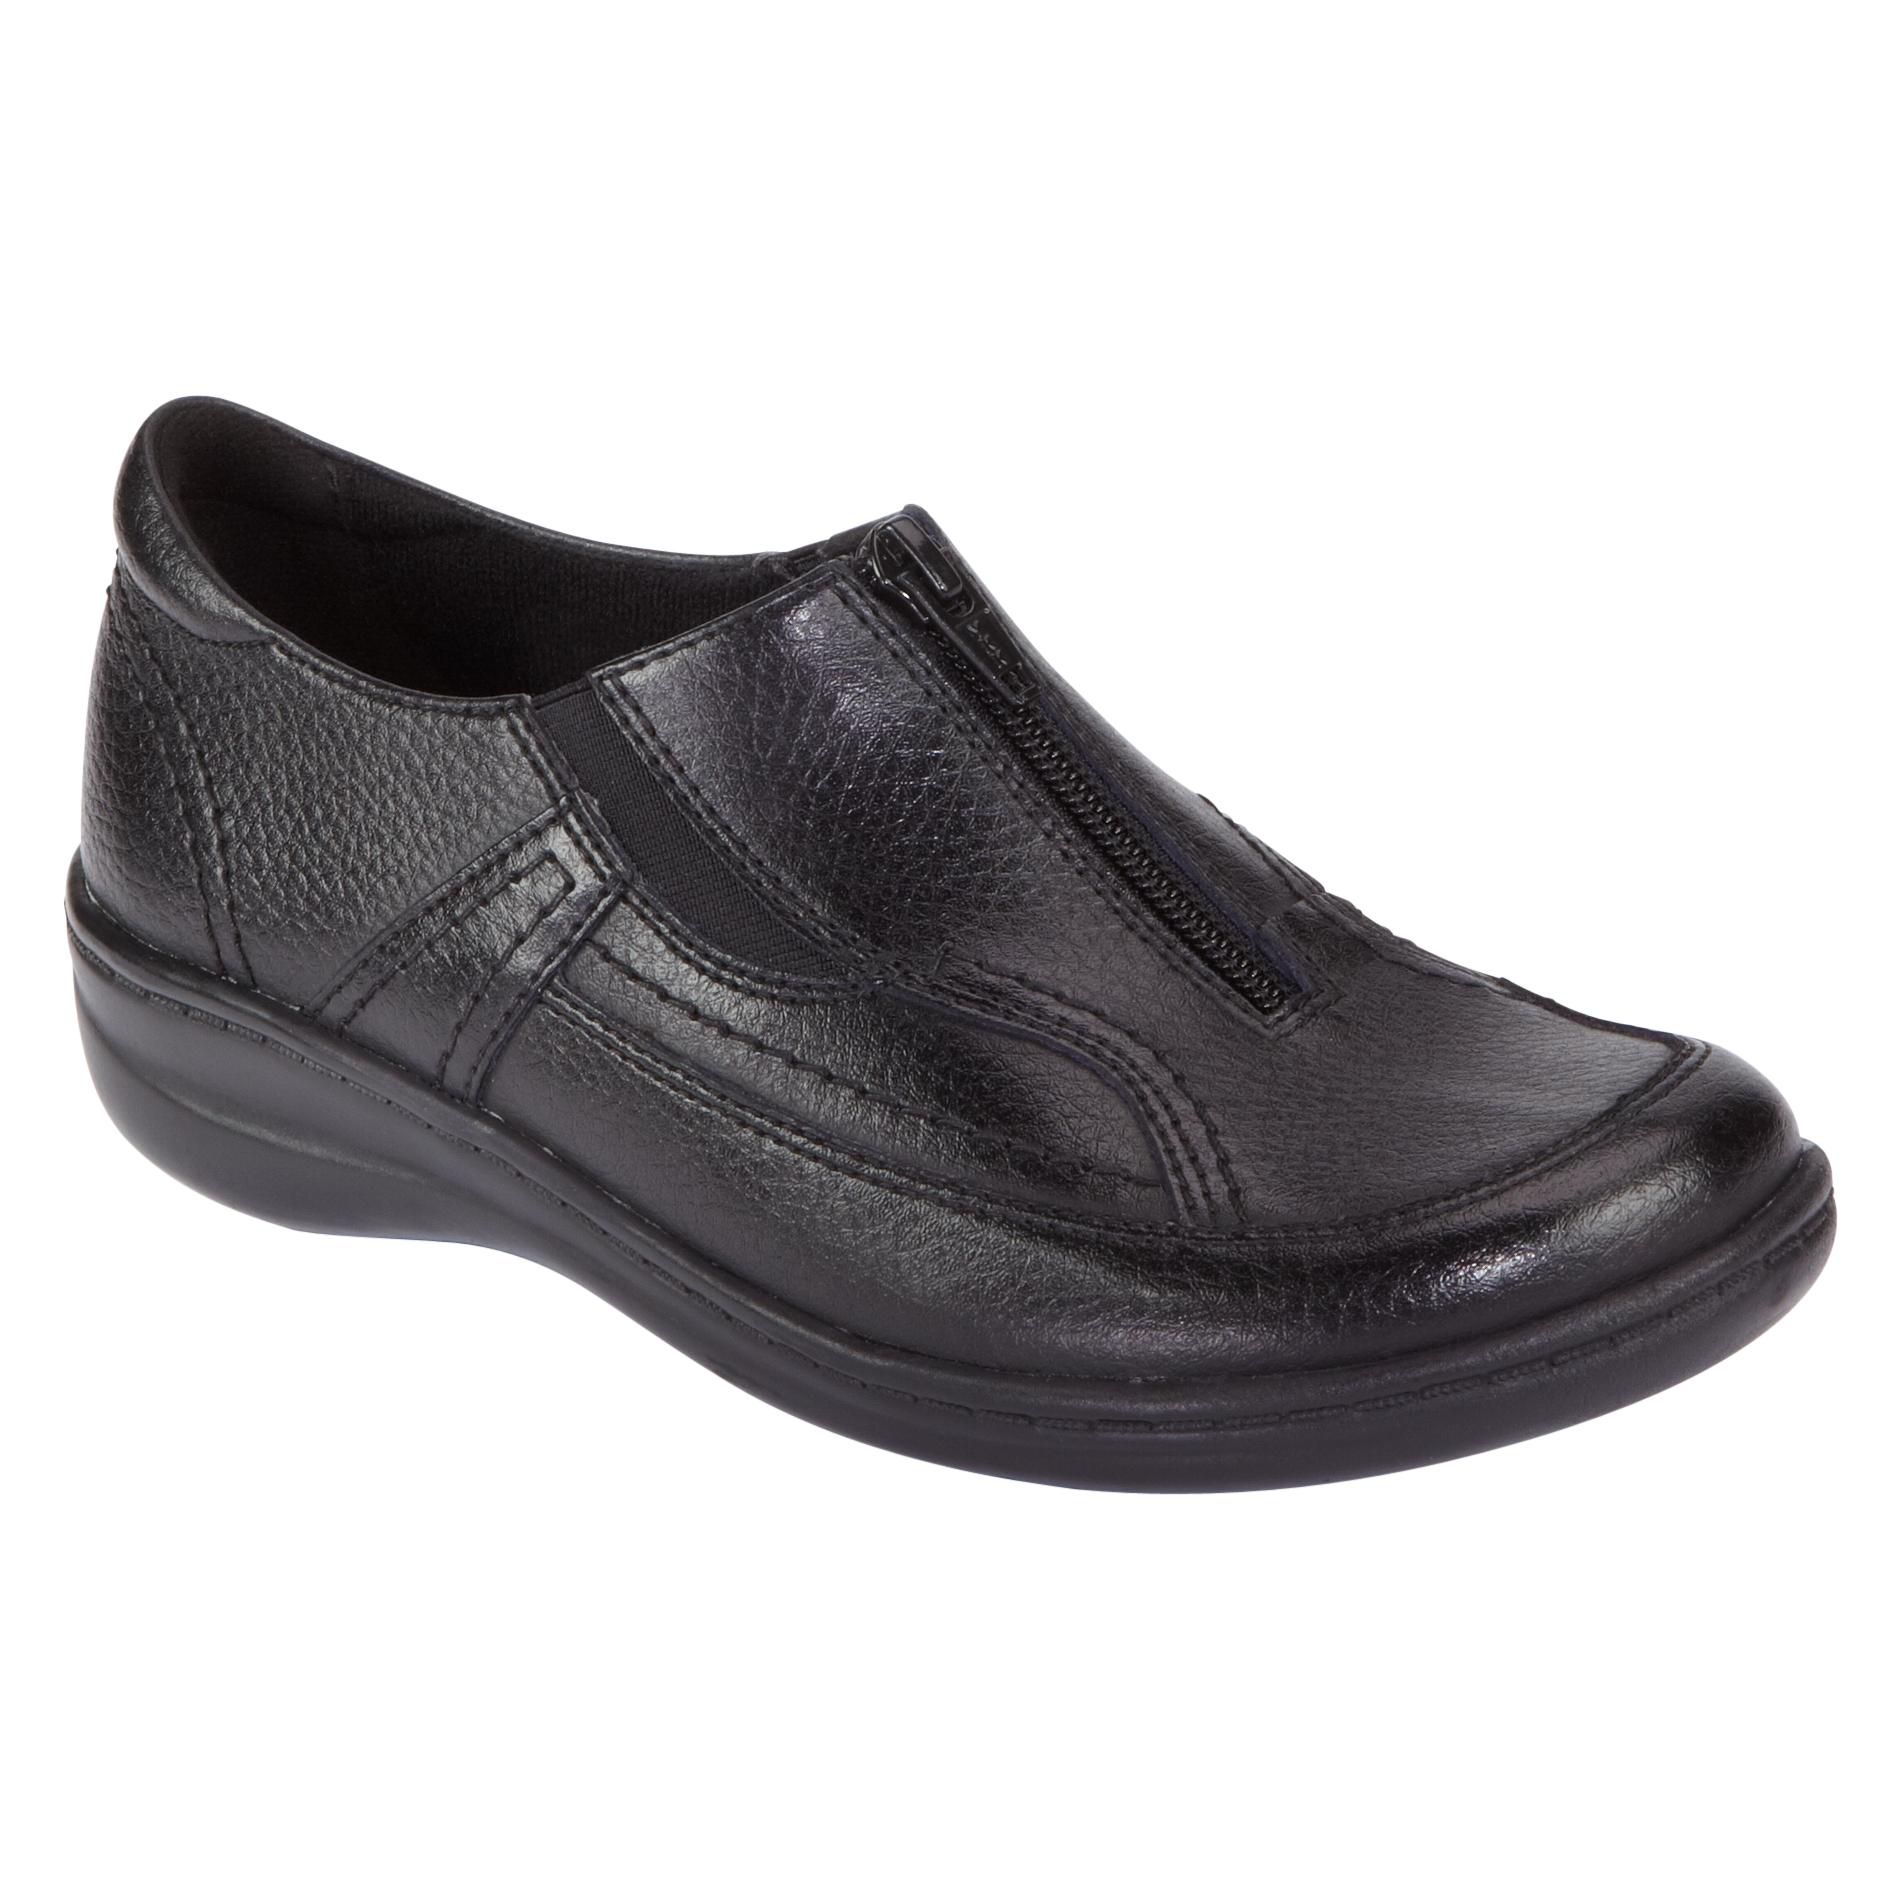 Thom McAn Women's Gorah Casual Comfort Shoe - Black - Shoes - Women's ...